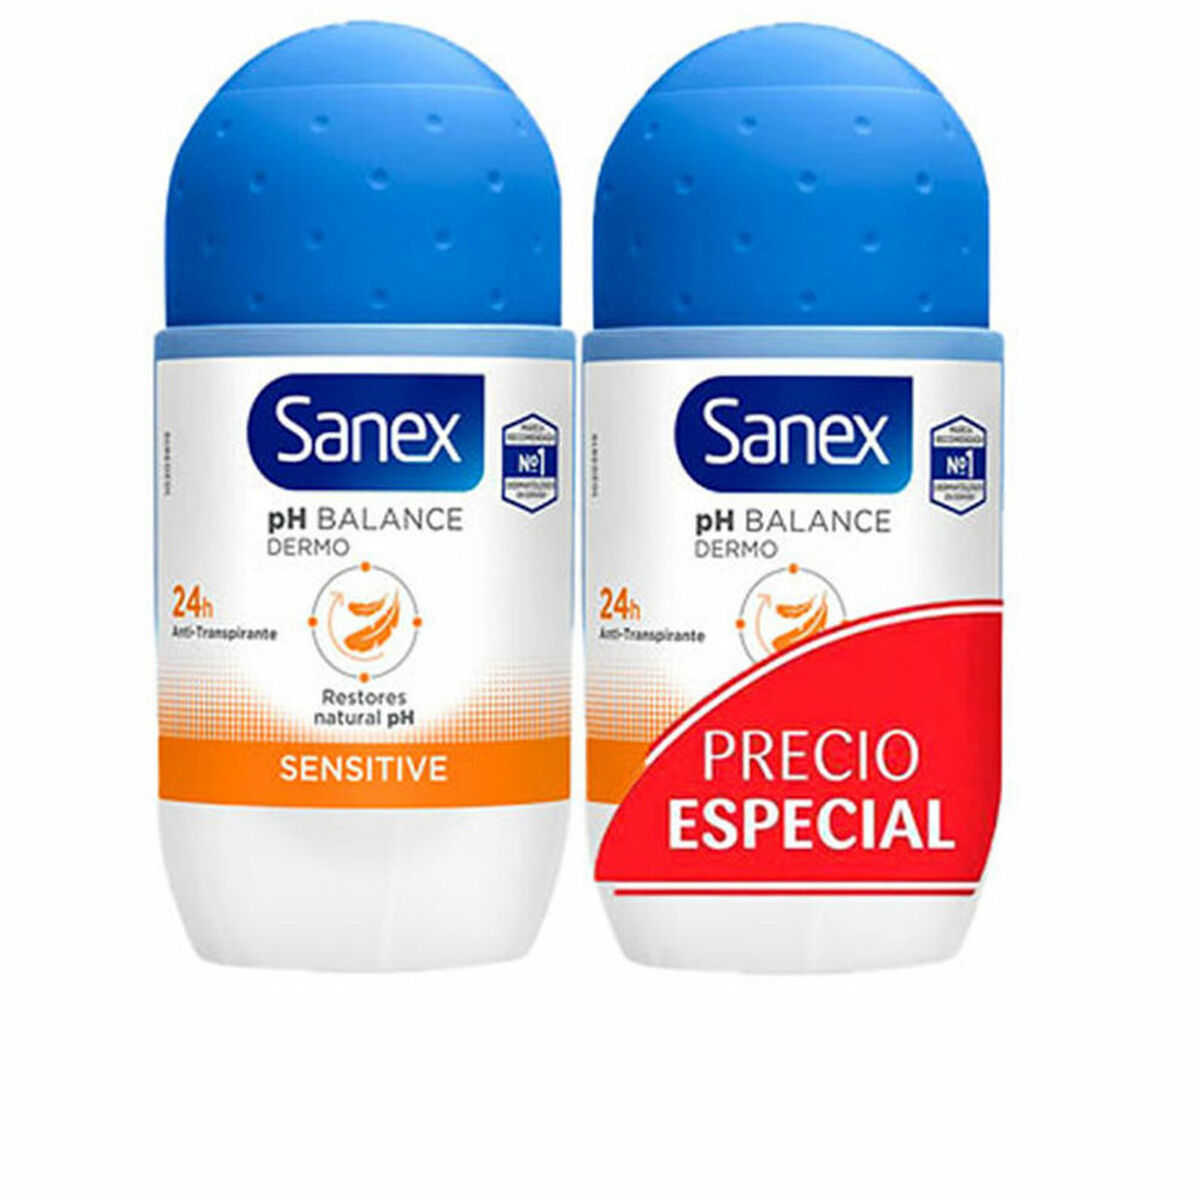 Roll-on deodorant sanex følsom 2 x 50 ml